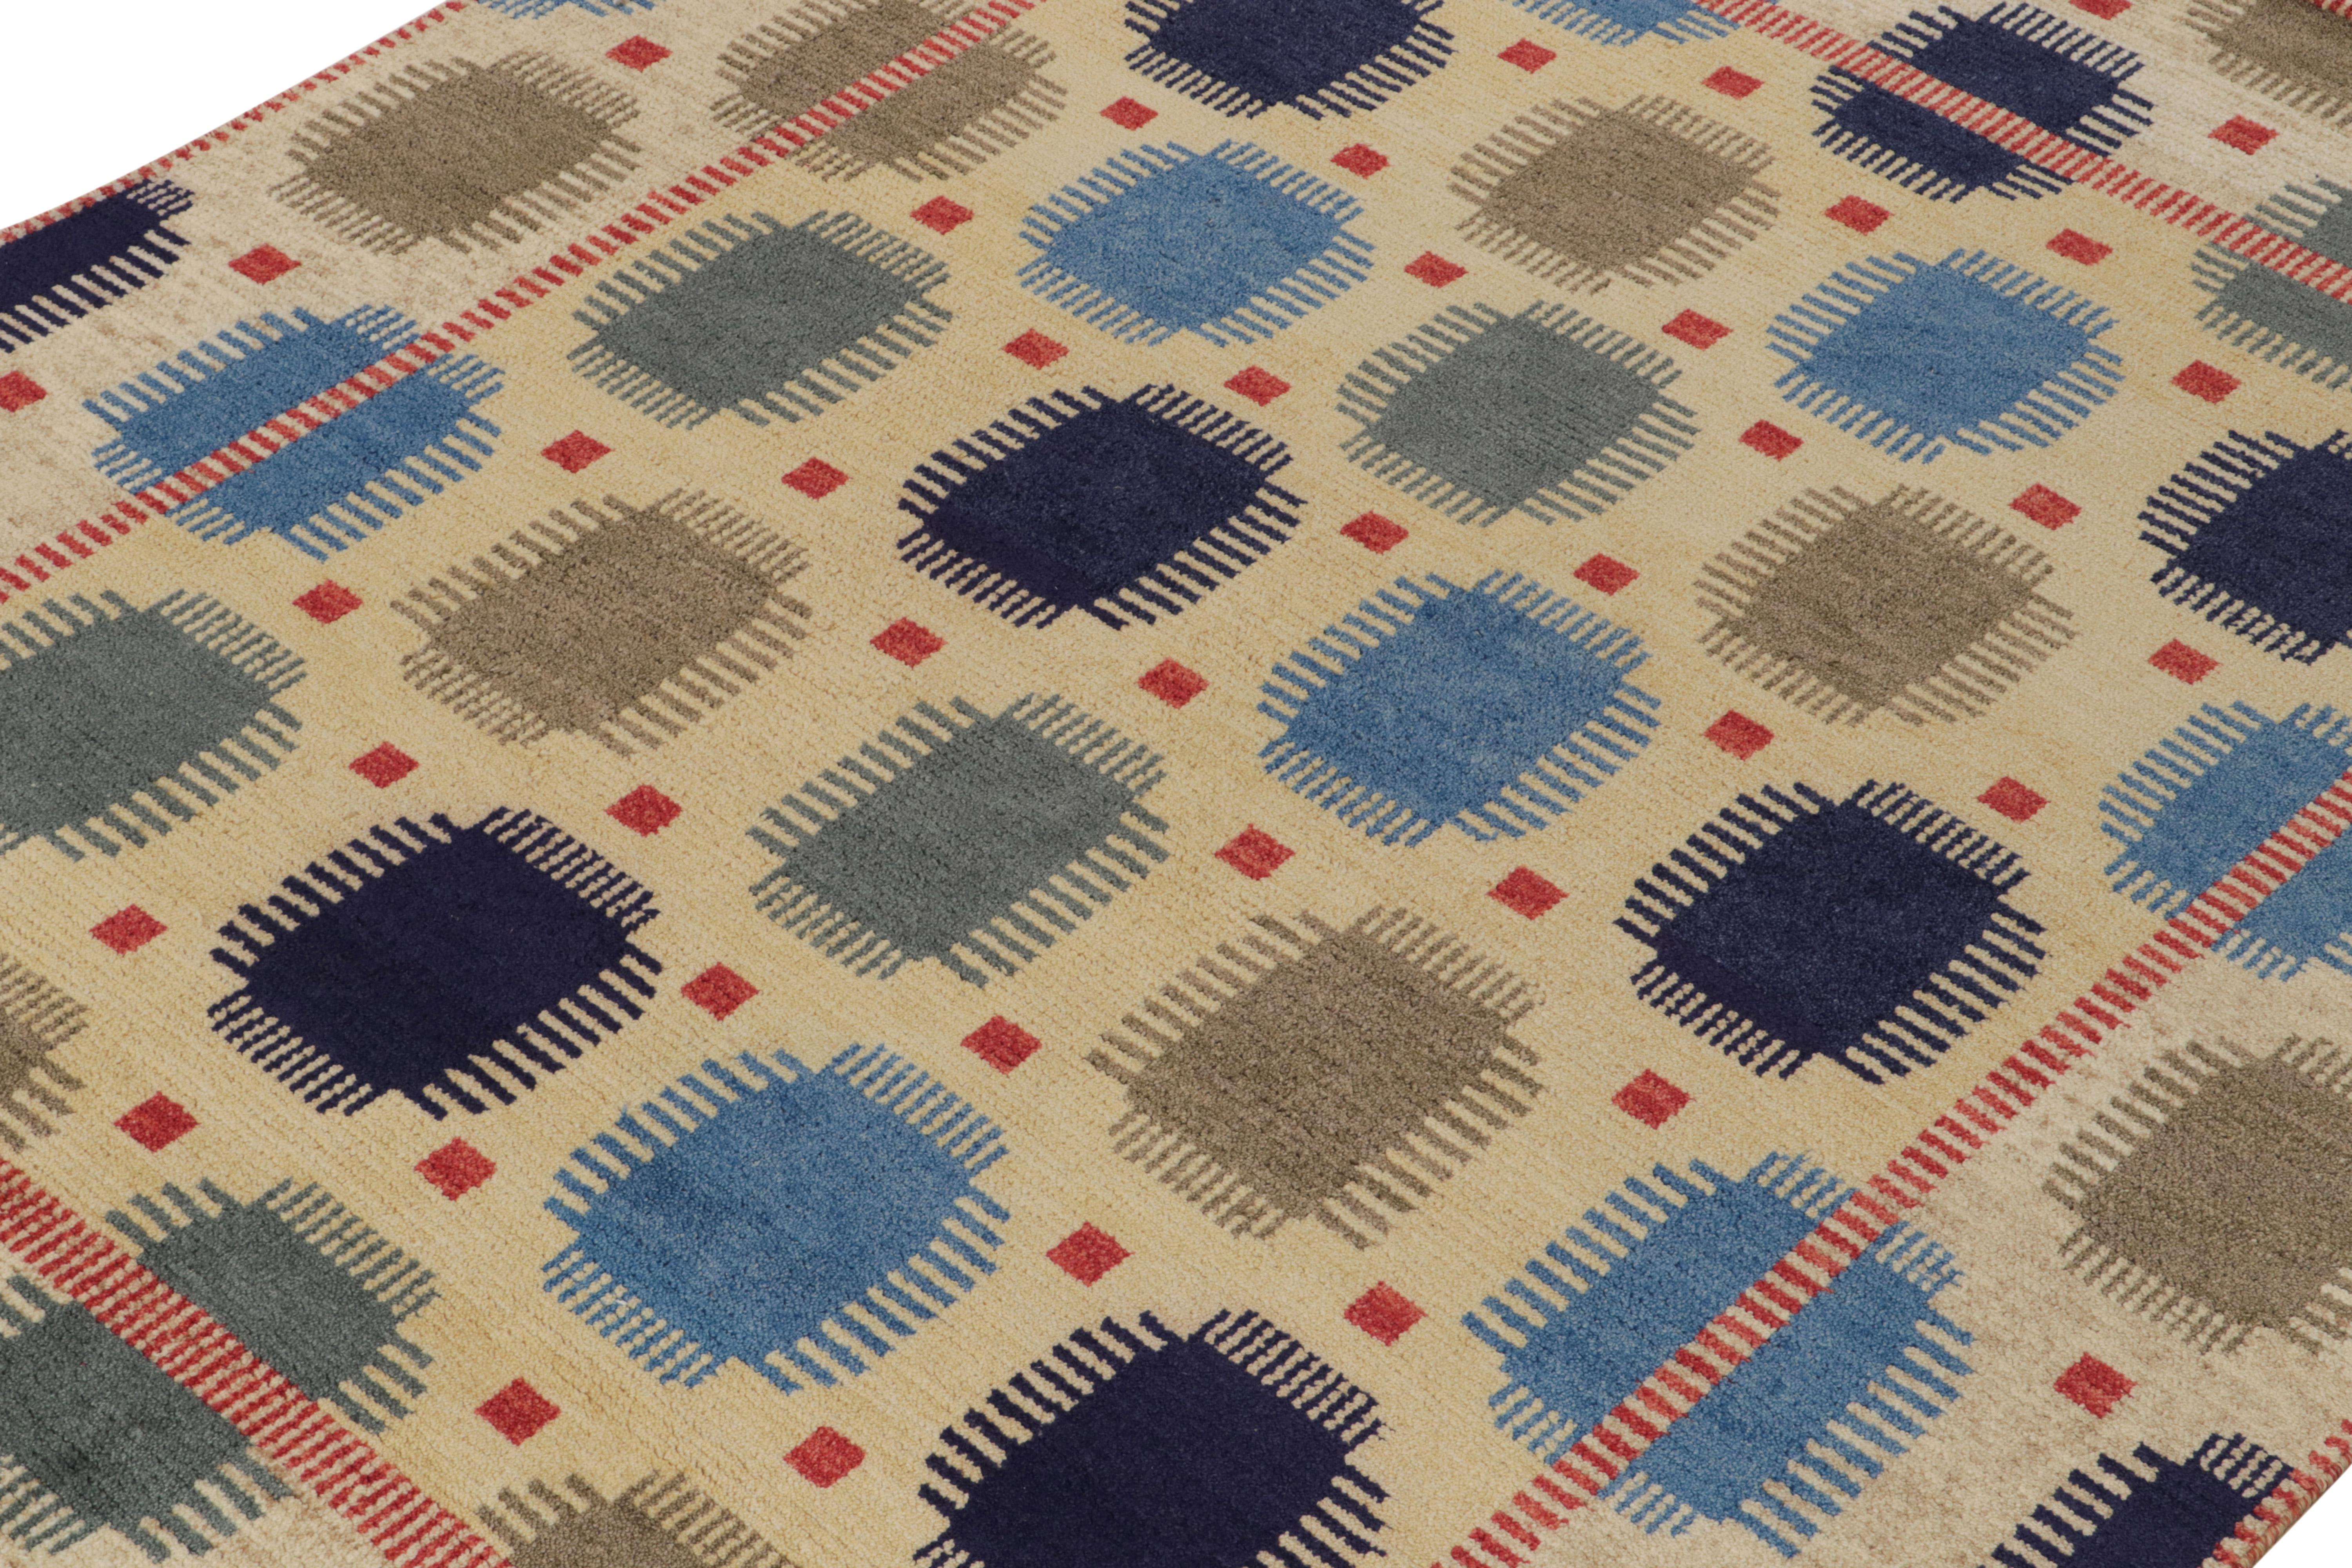 Indian Rug & Kilim's Scandinavian Style Rug in Beige-Brown, Blue Geometric Pattern For Sale